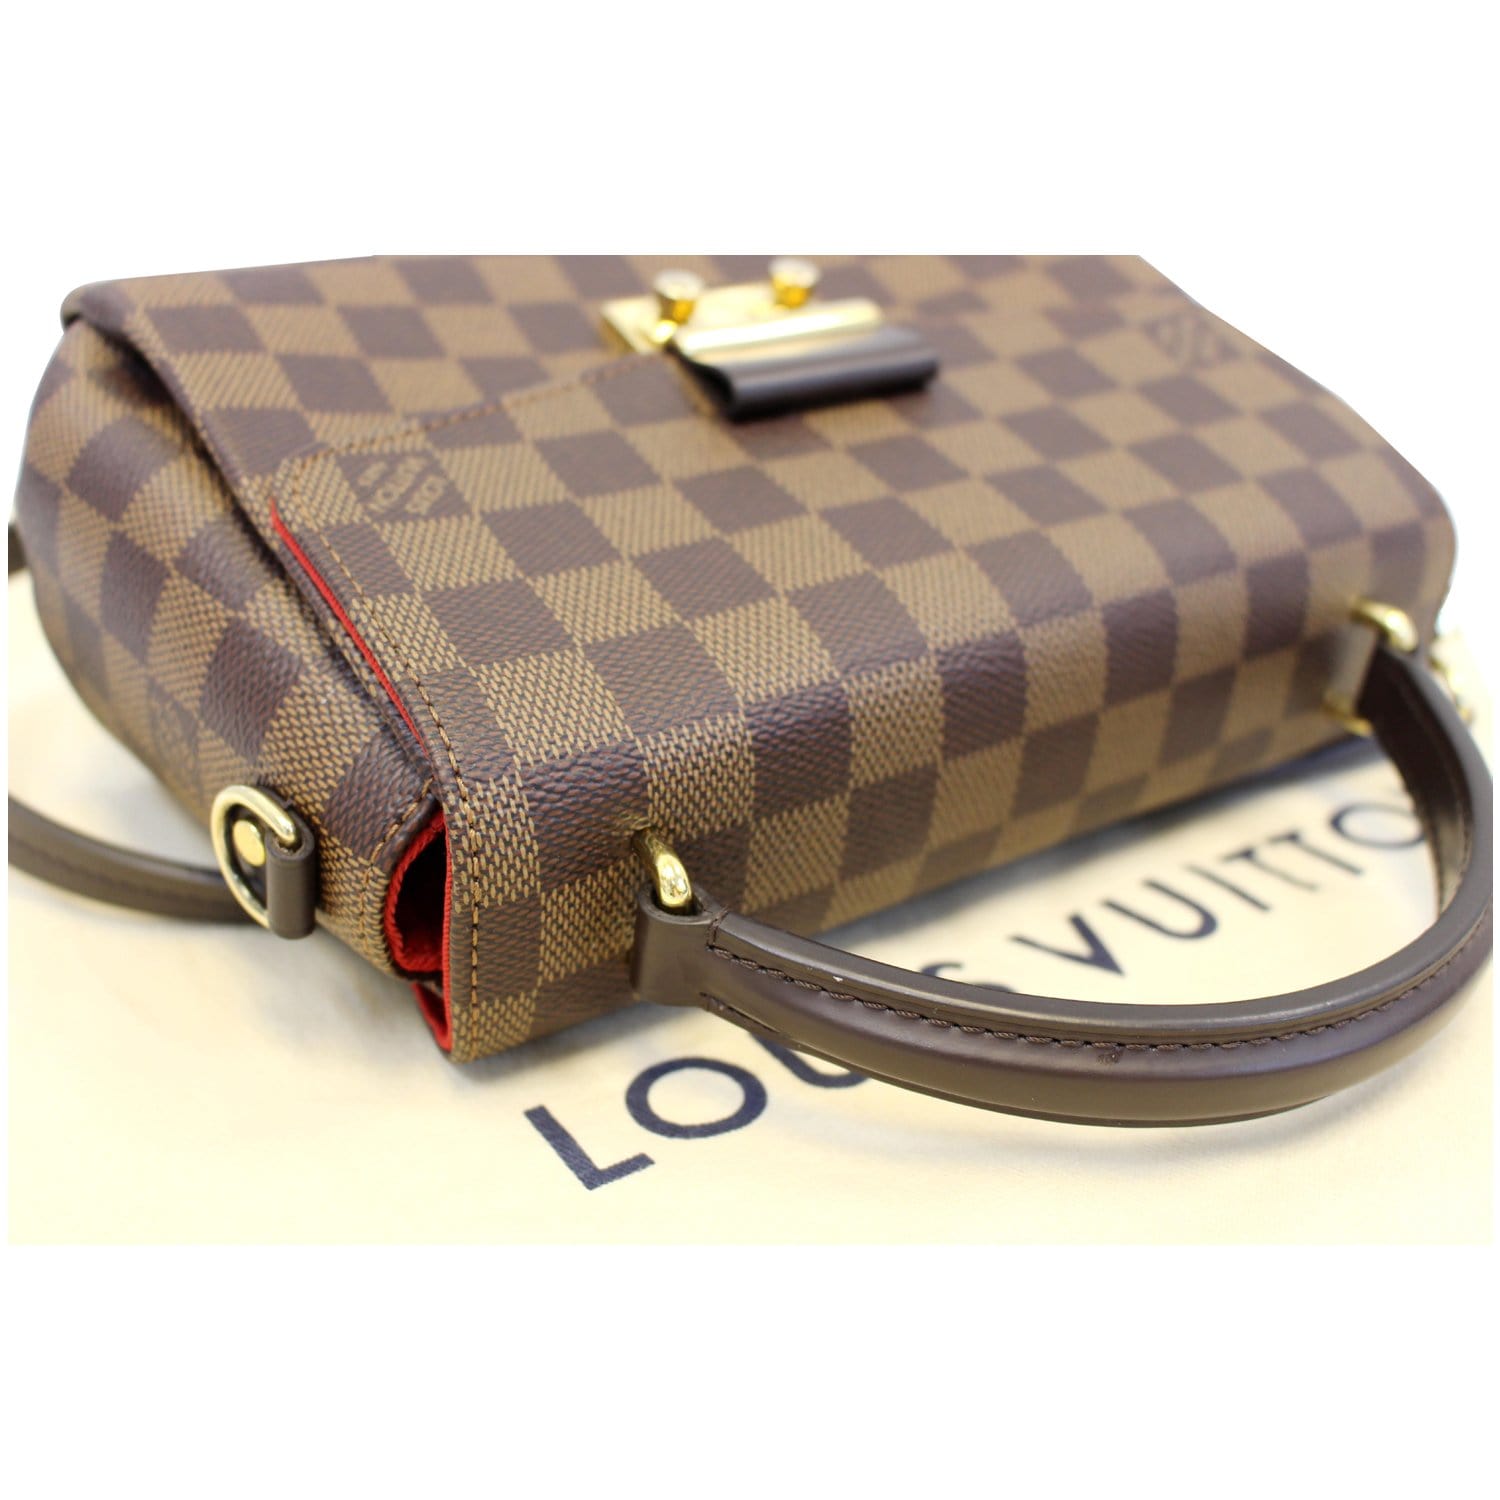 Louis Vuitton Croisette Damier Ebene Crossbody Bag Brown Sd0189